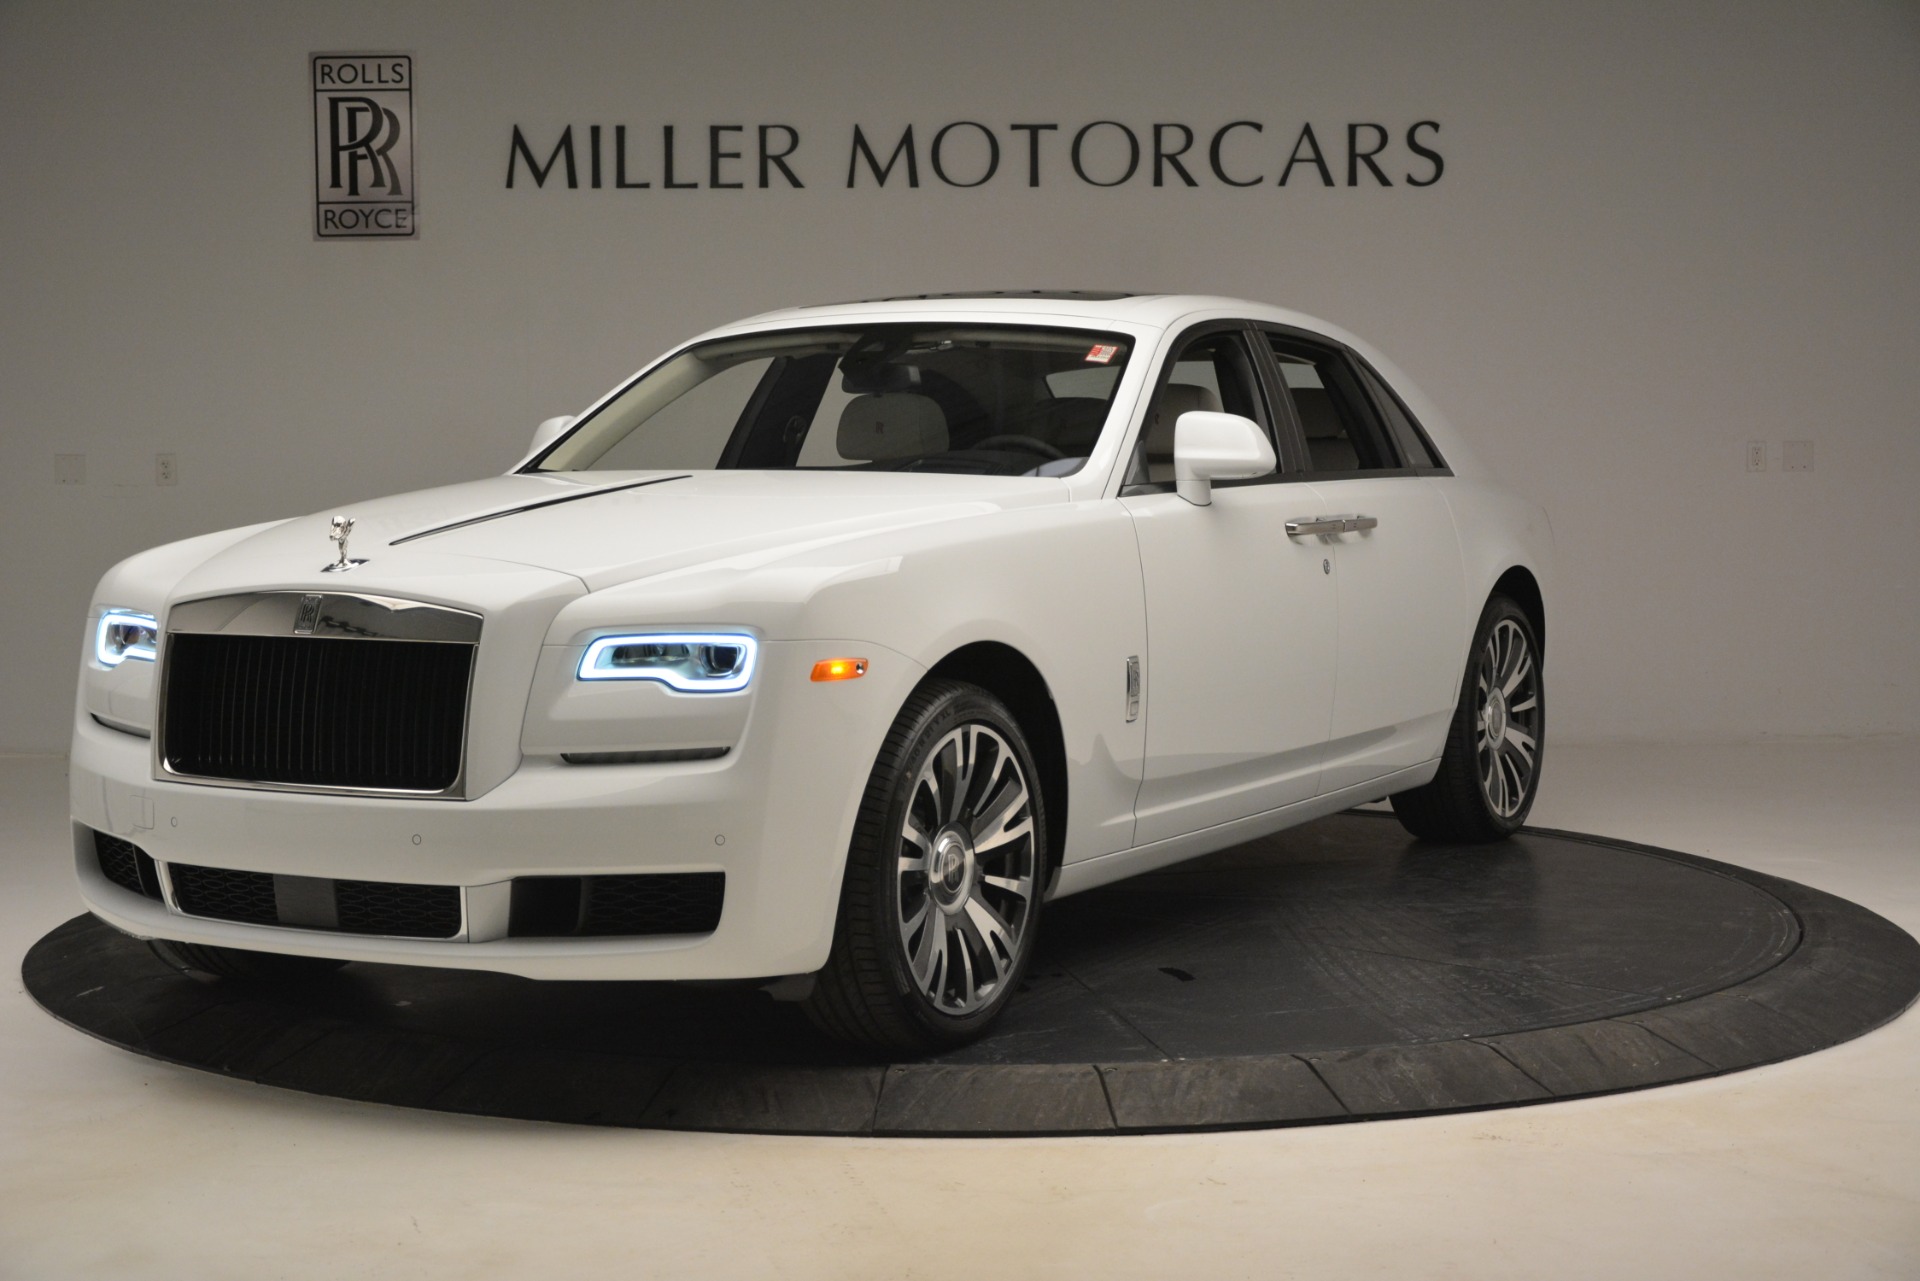 New 2019 Rolls Royce Ghost For Sale Miller Motorcars